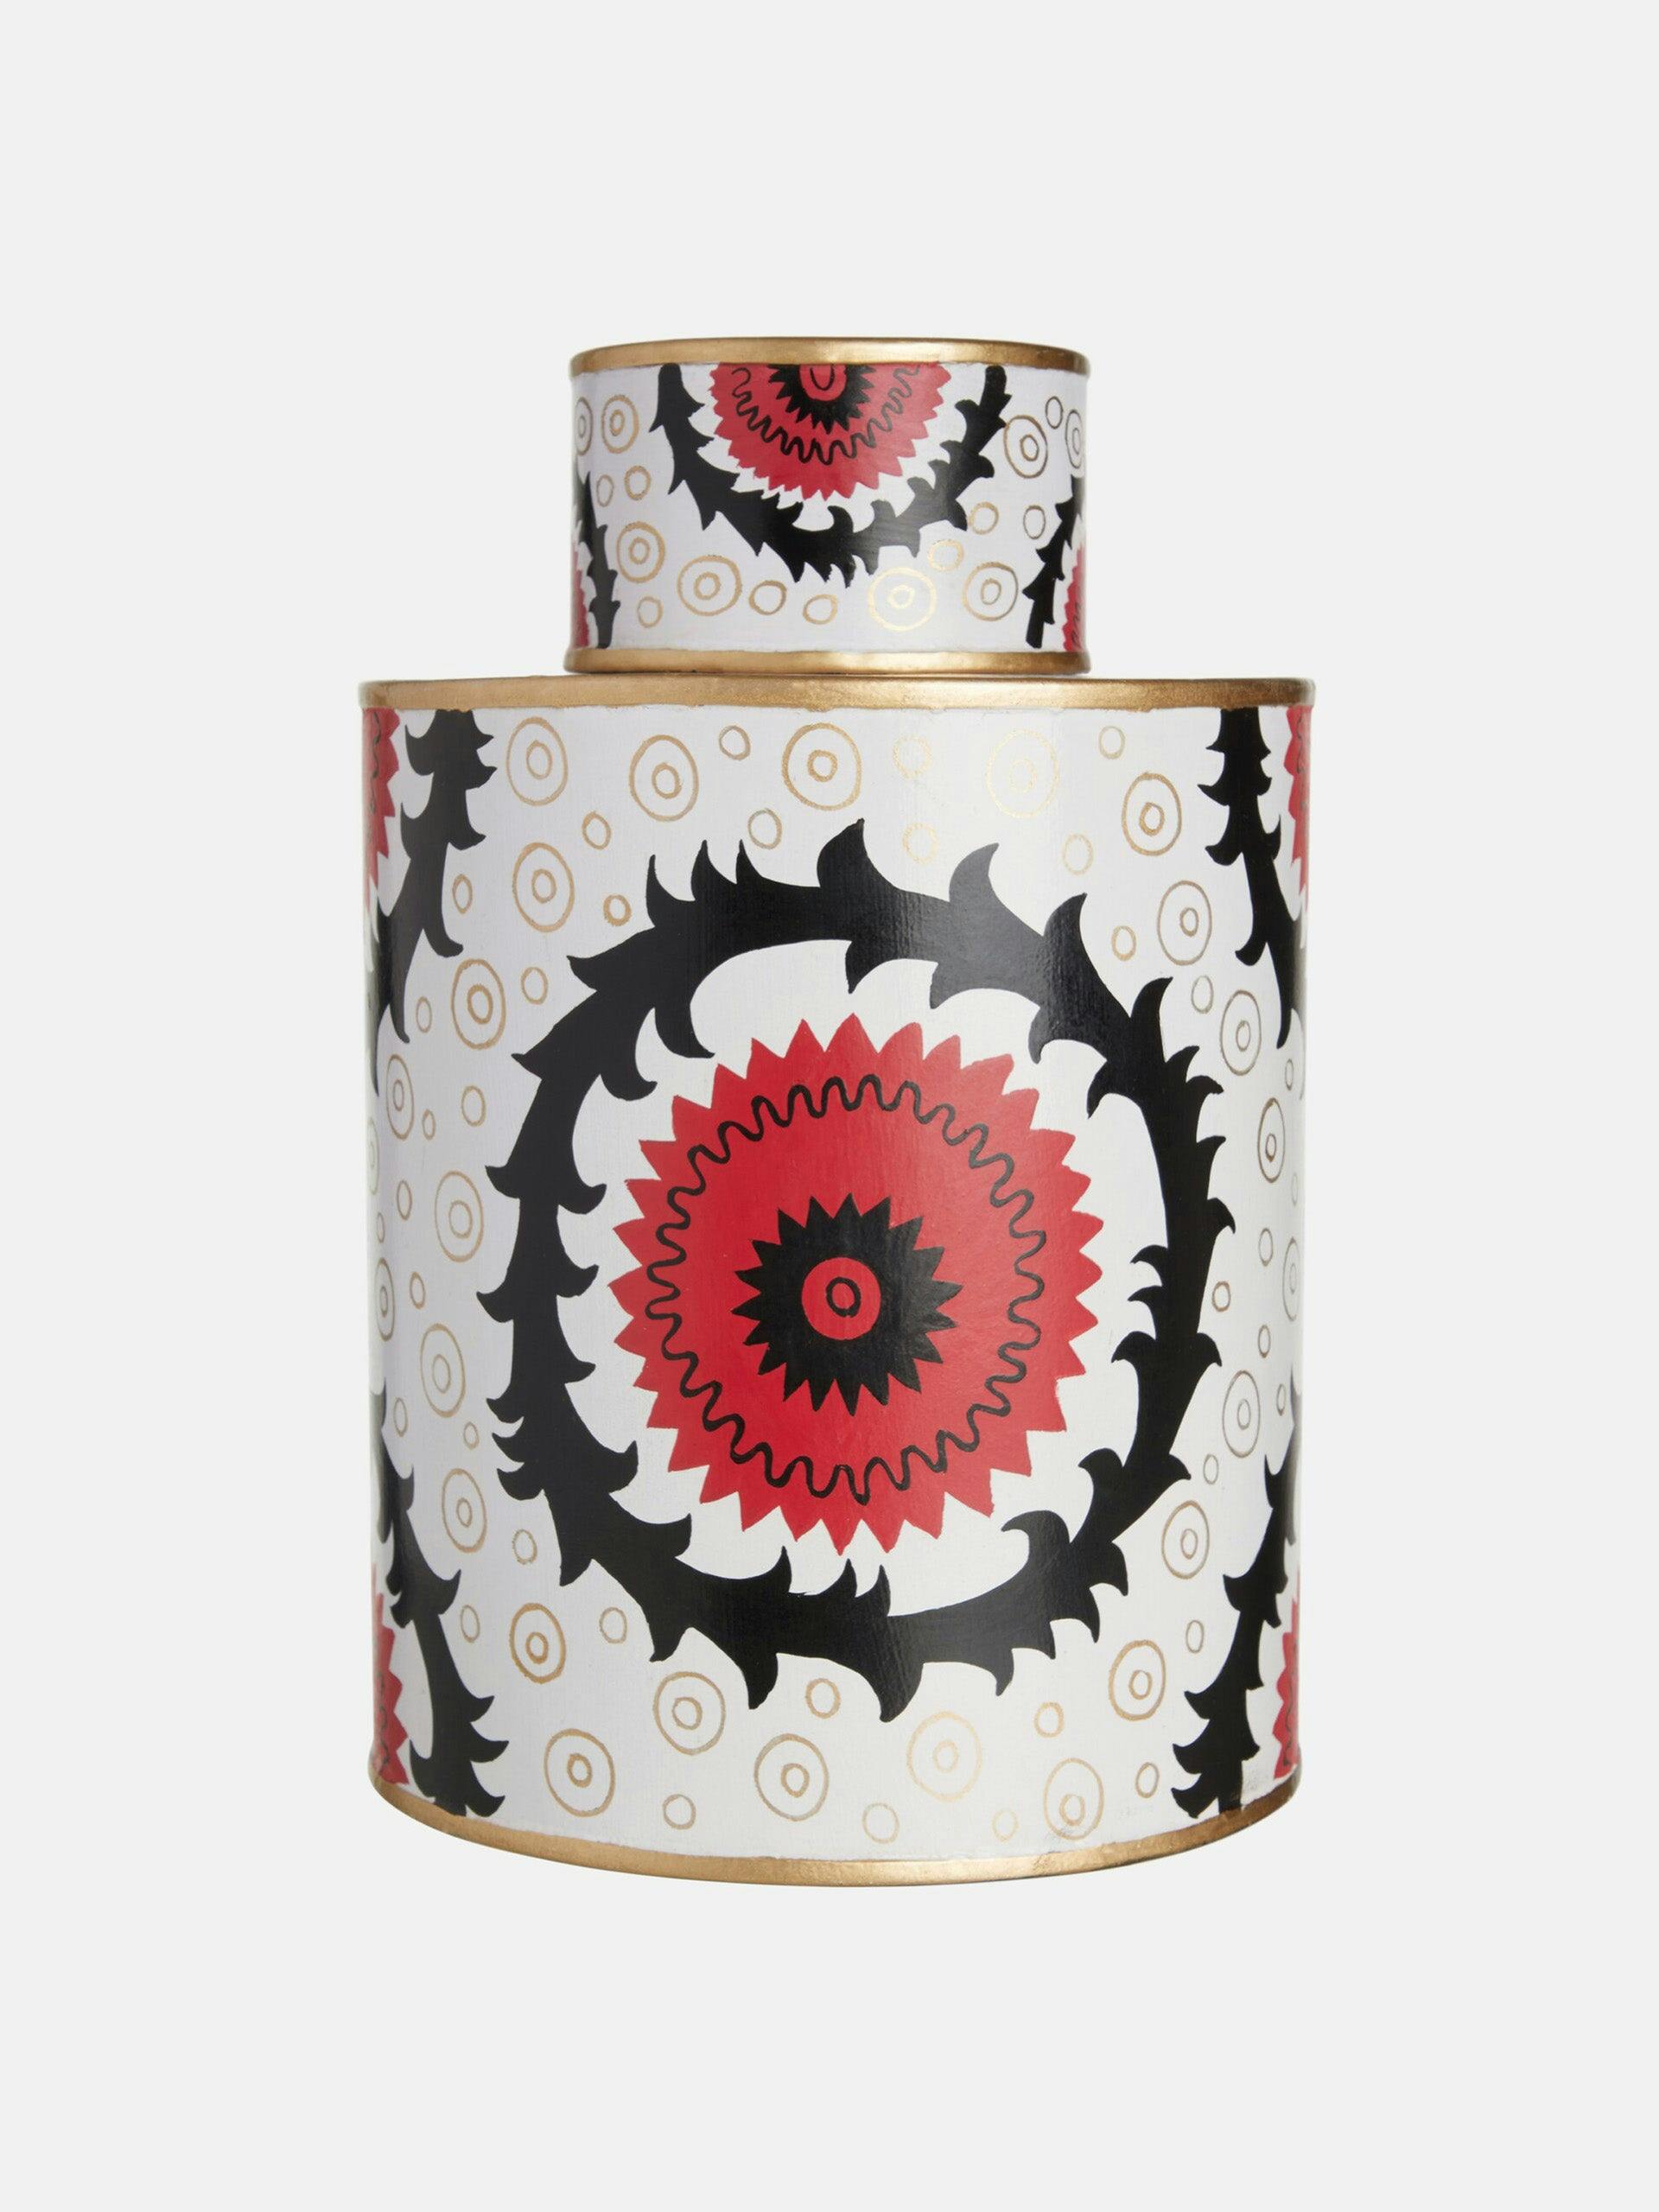 Hand-painted iron vase